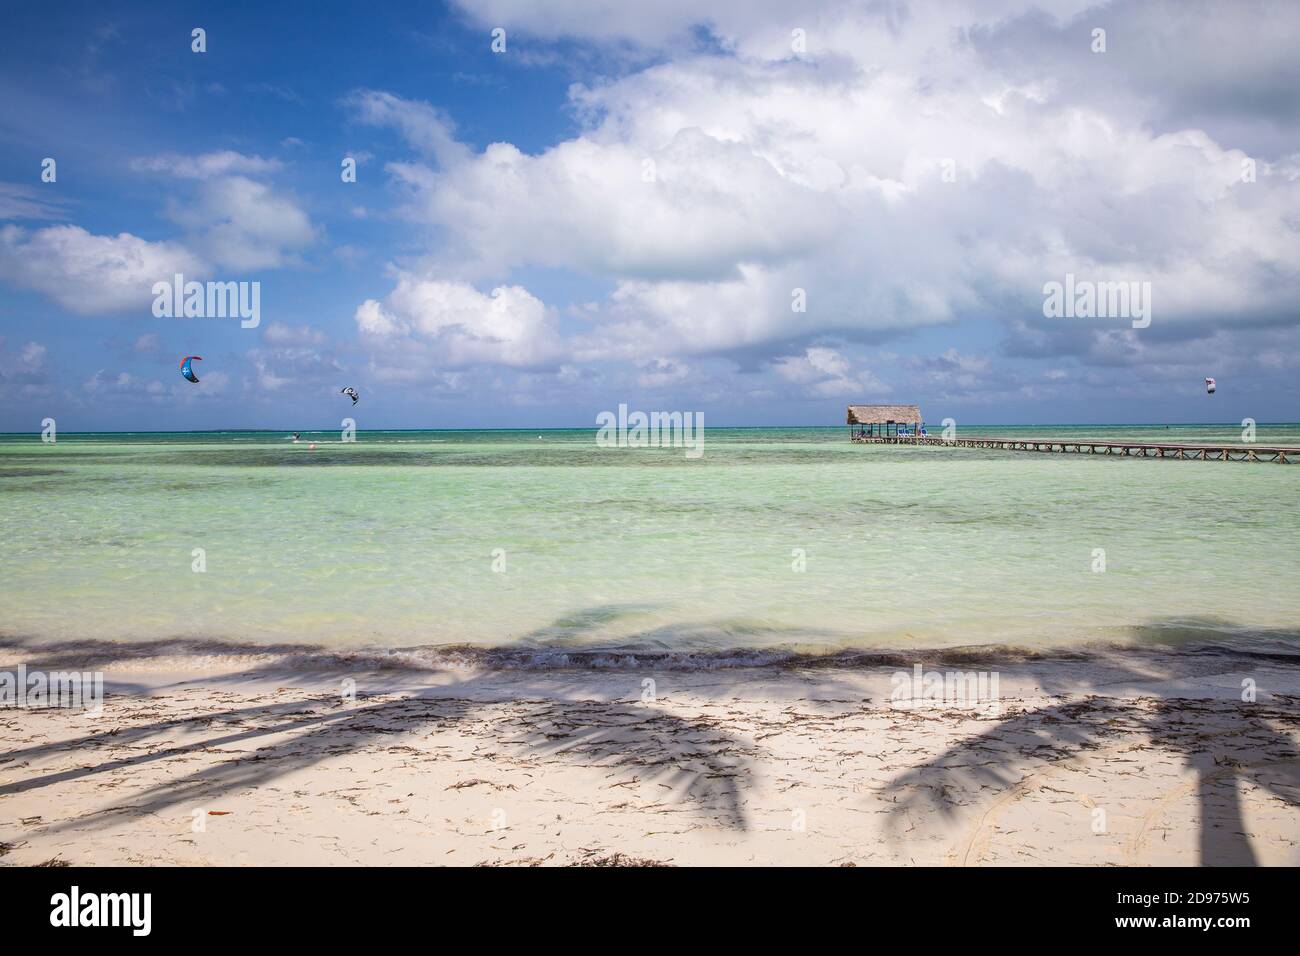 Cuba, Jardines del Rey, Cayo Guillermo, Playa El Paso, Shadow of palm trees on beach Stock Photo